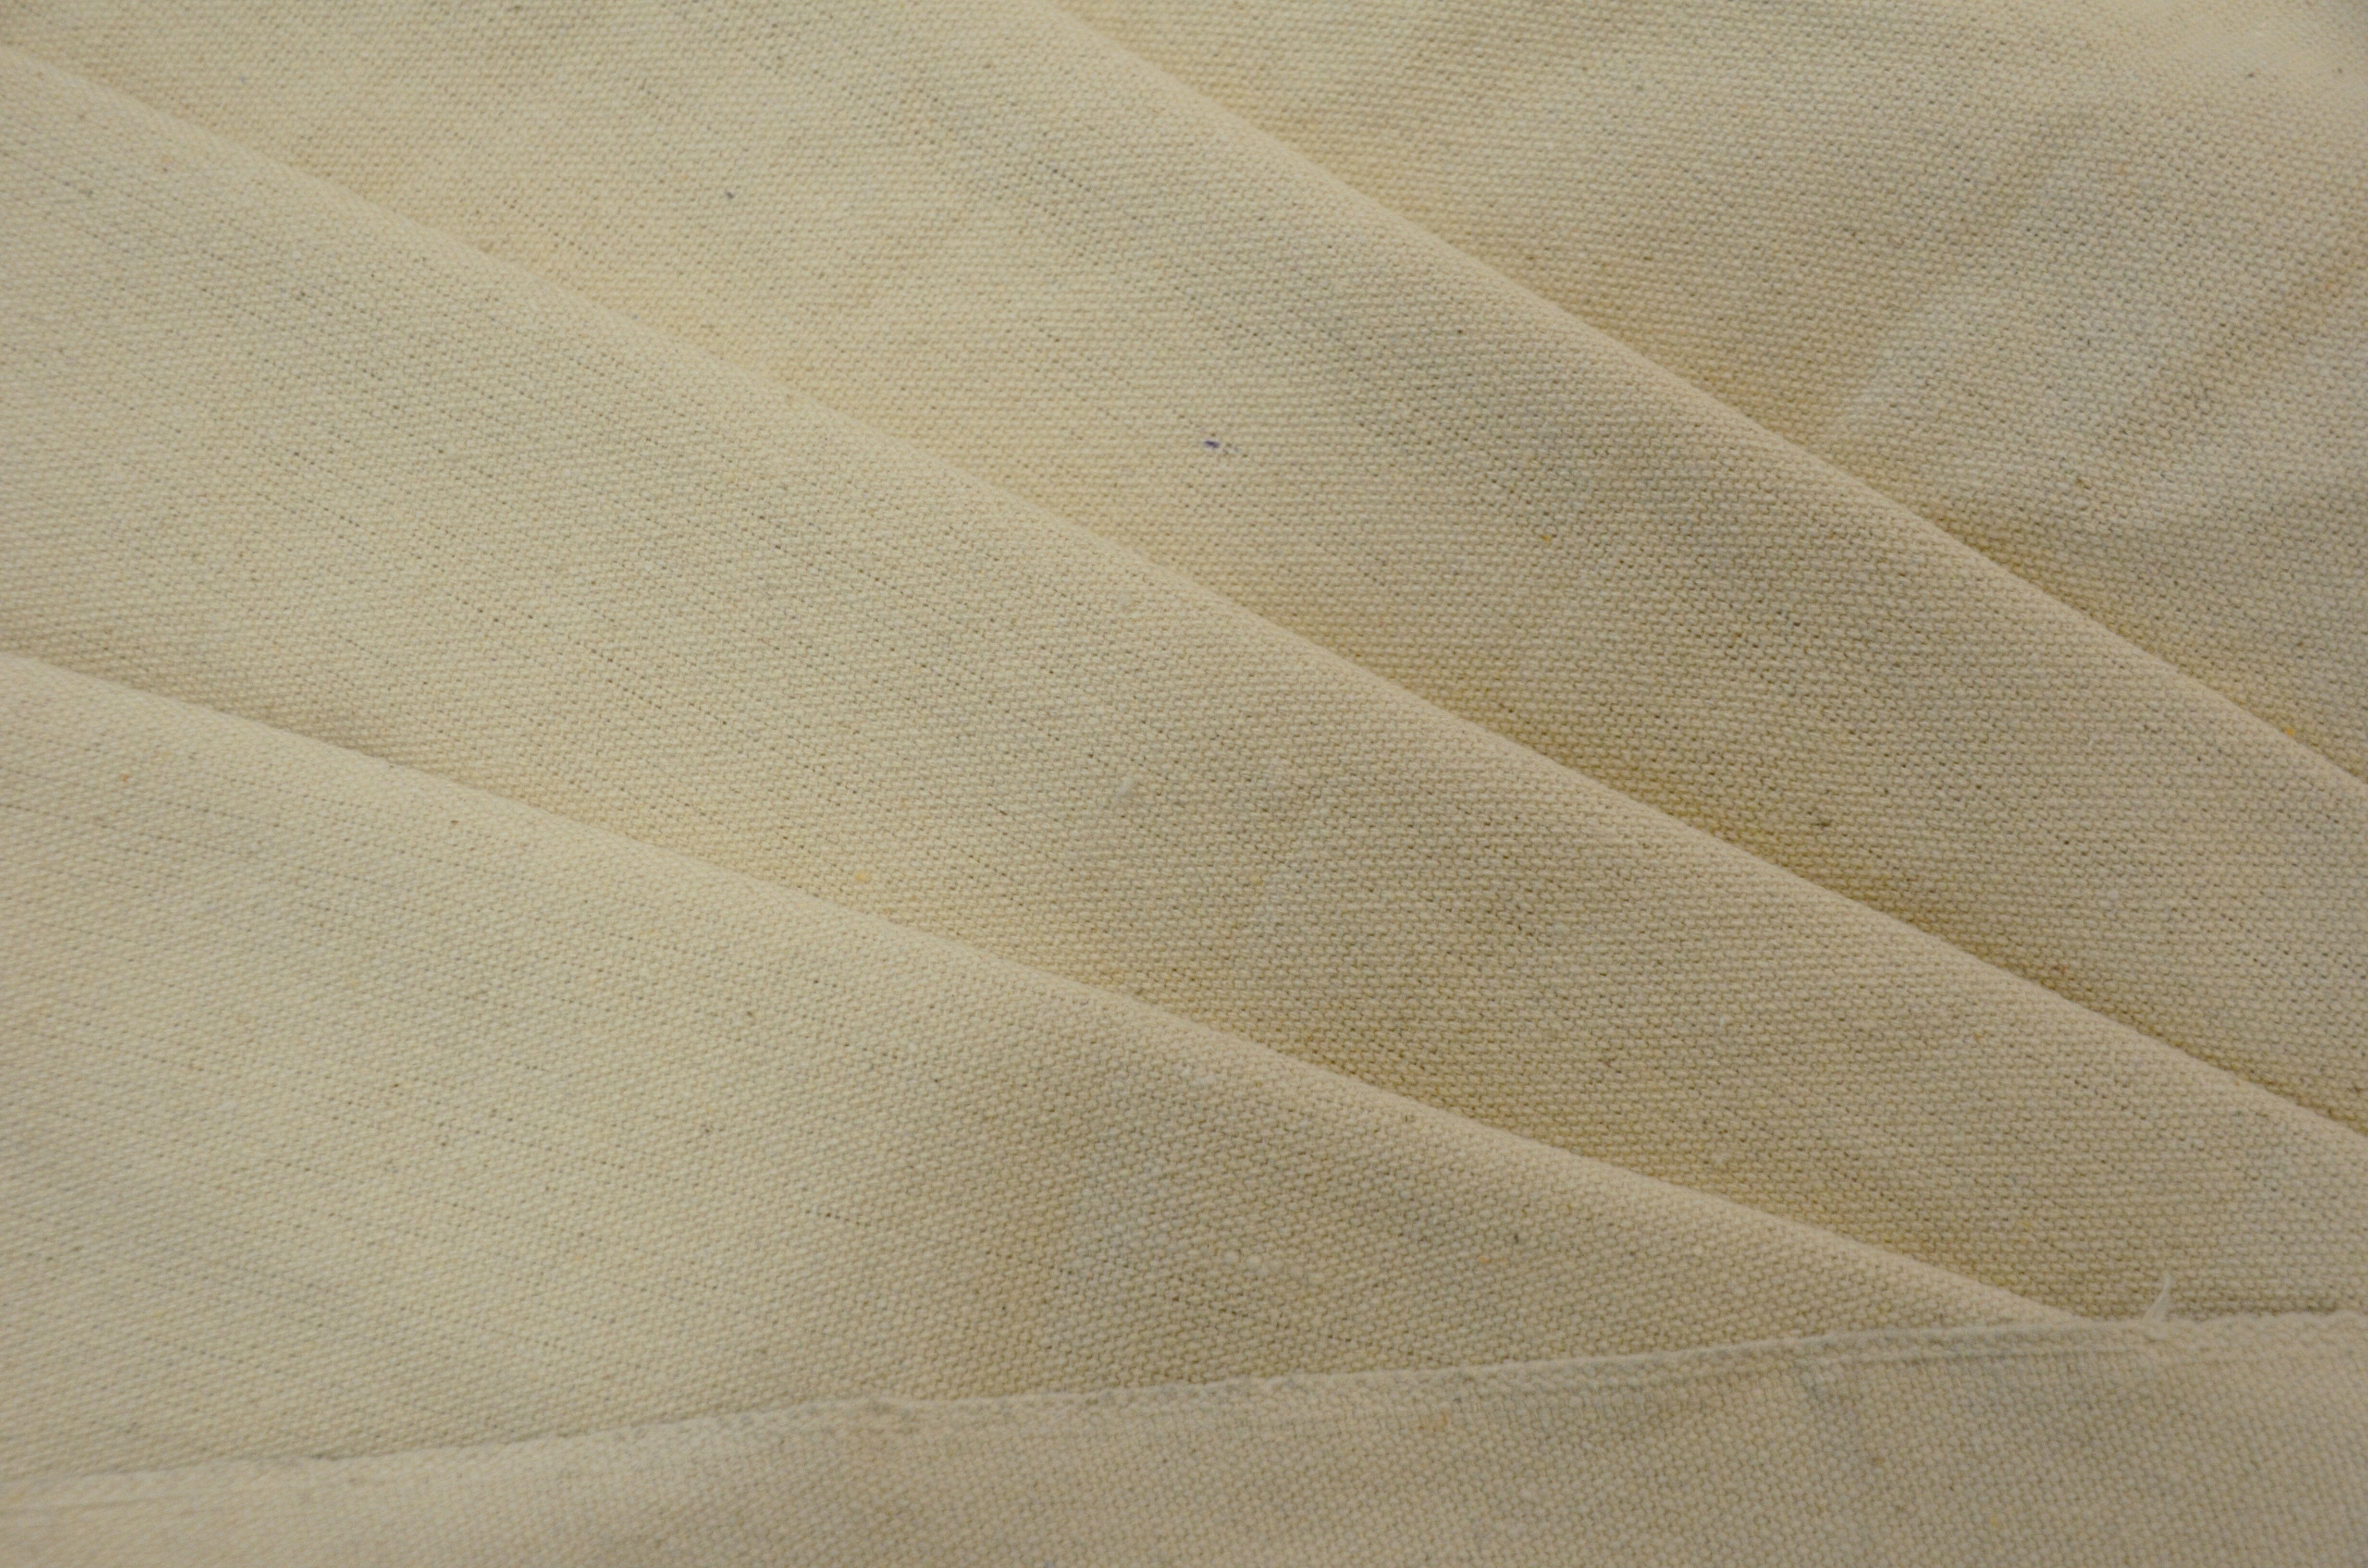 10oz / 60 Cotton Canvas / Duck Cloth - Natural